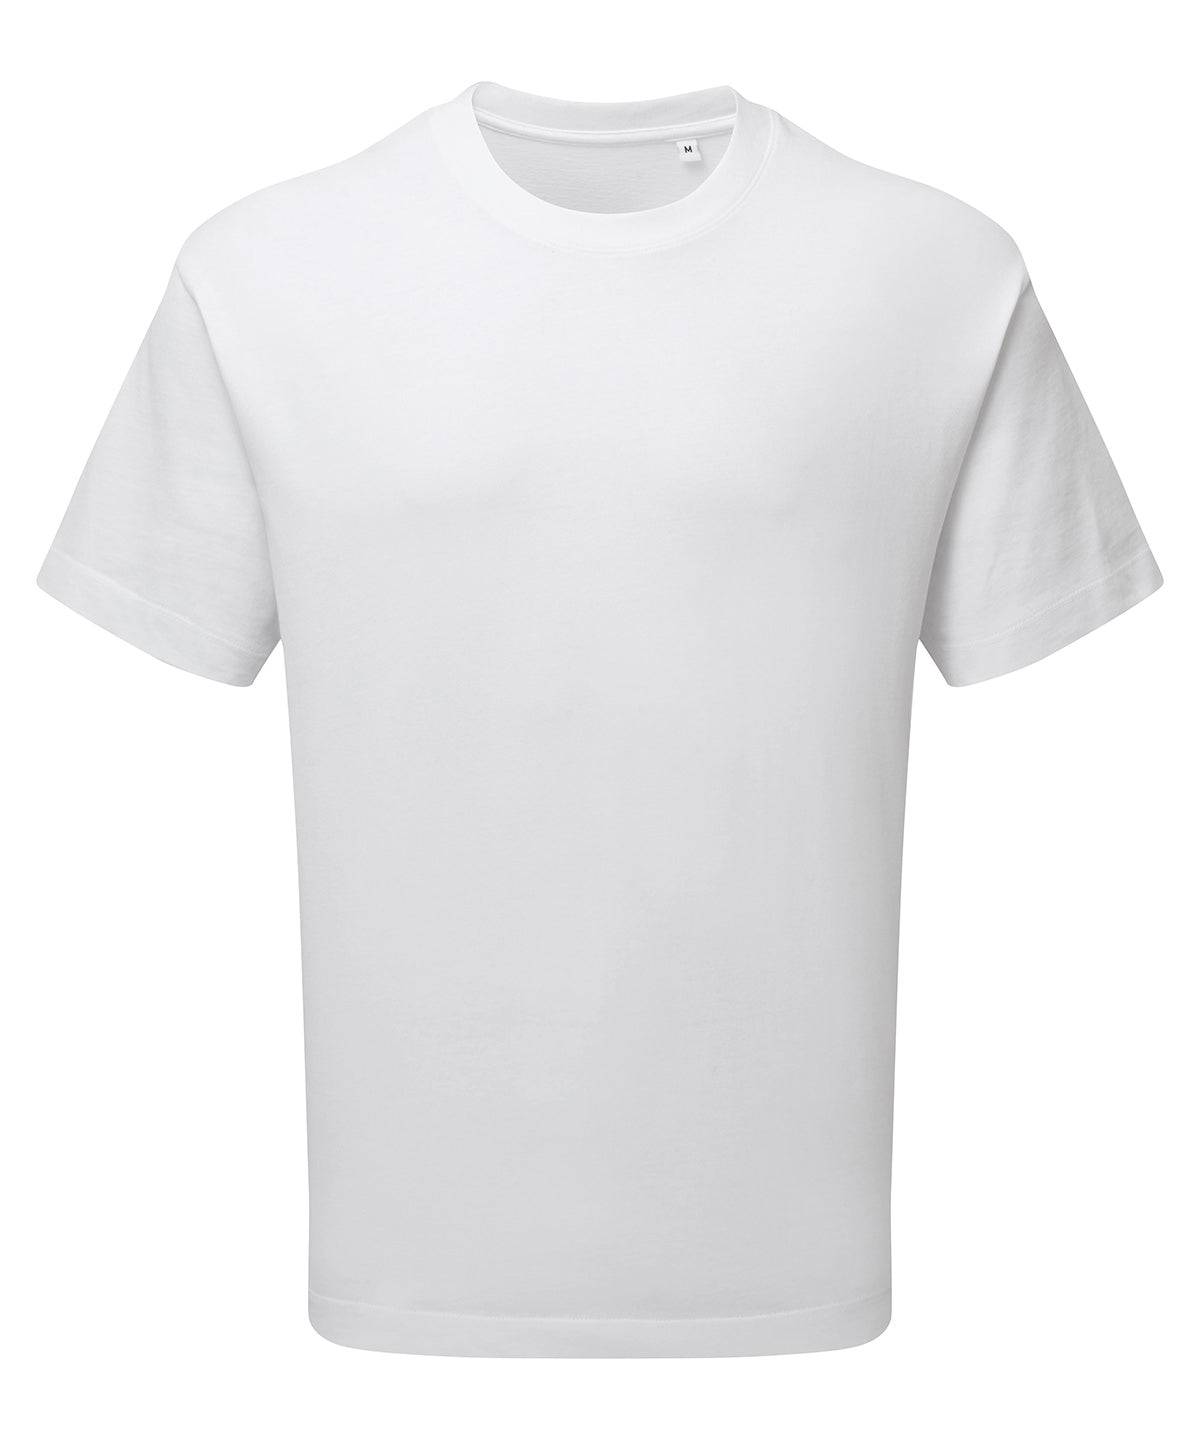 White - Anthem heavyweight t-shirt